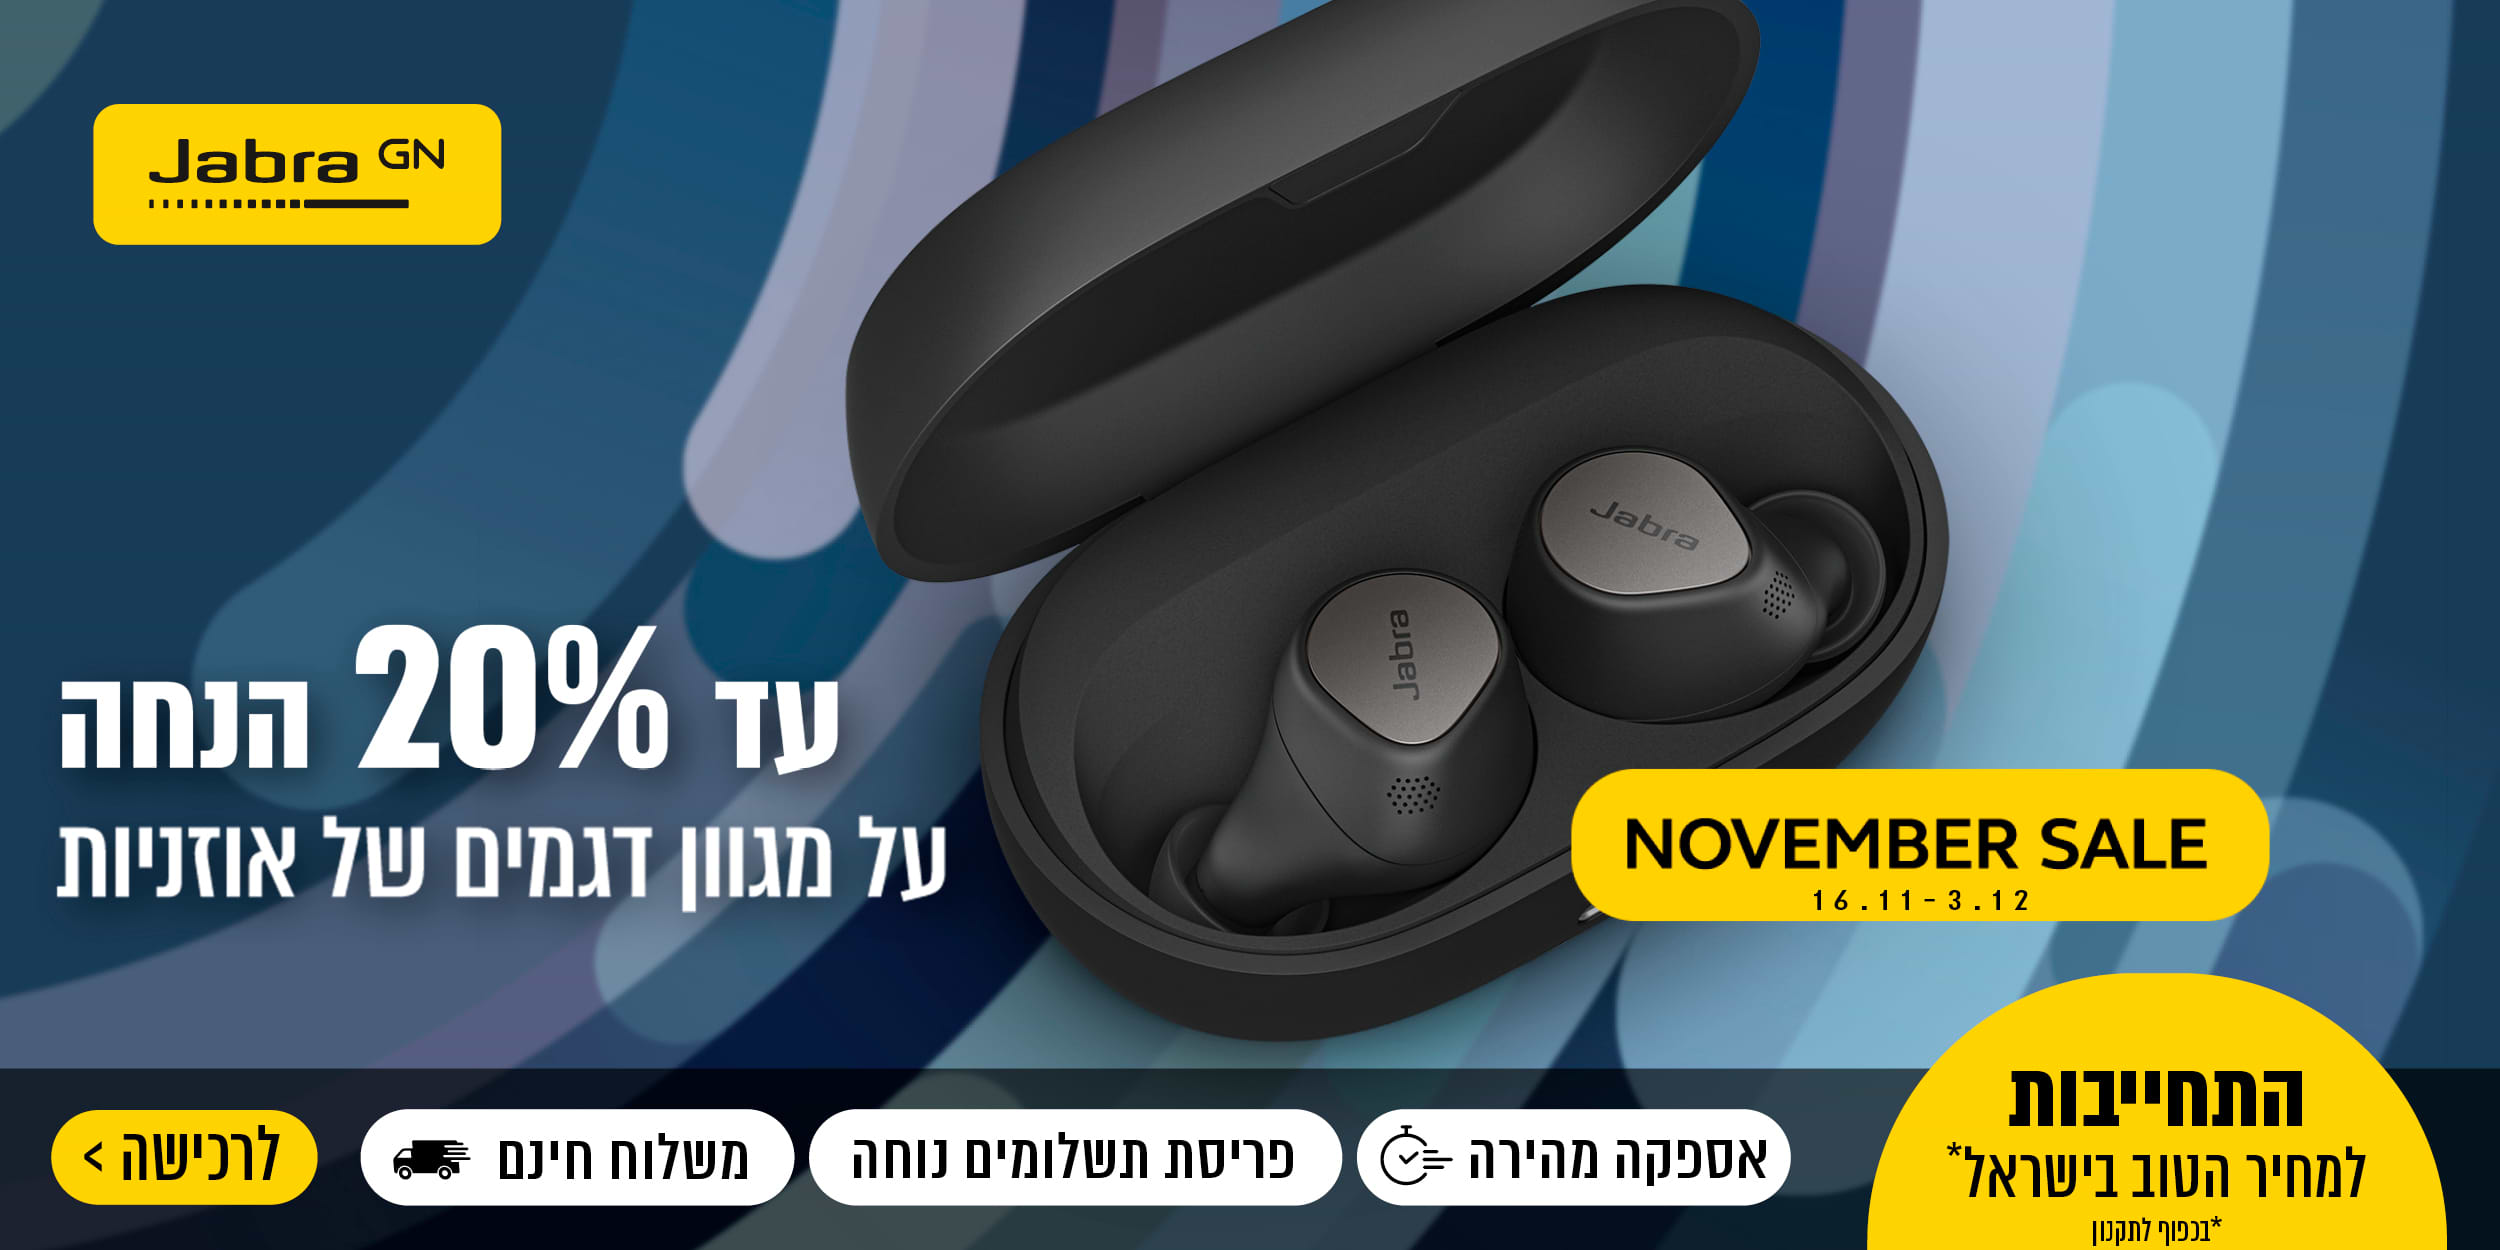 Jabra Novermber Sale 16.11-3.12   עד 20 אחוזי הנחה על מגוון דגמים של אוזניות